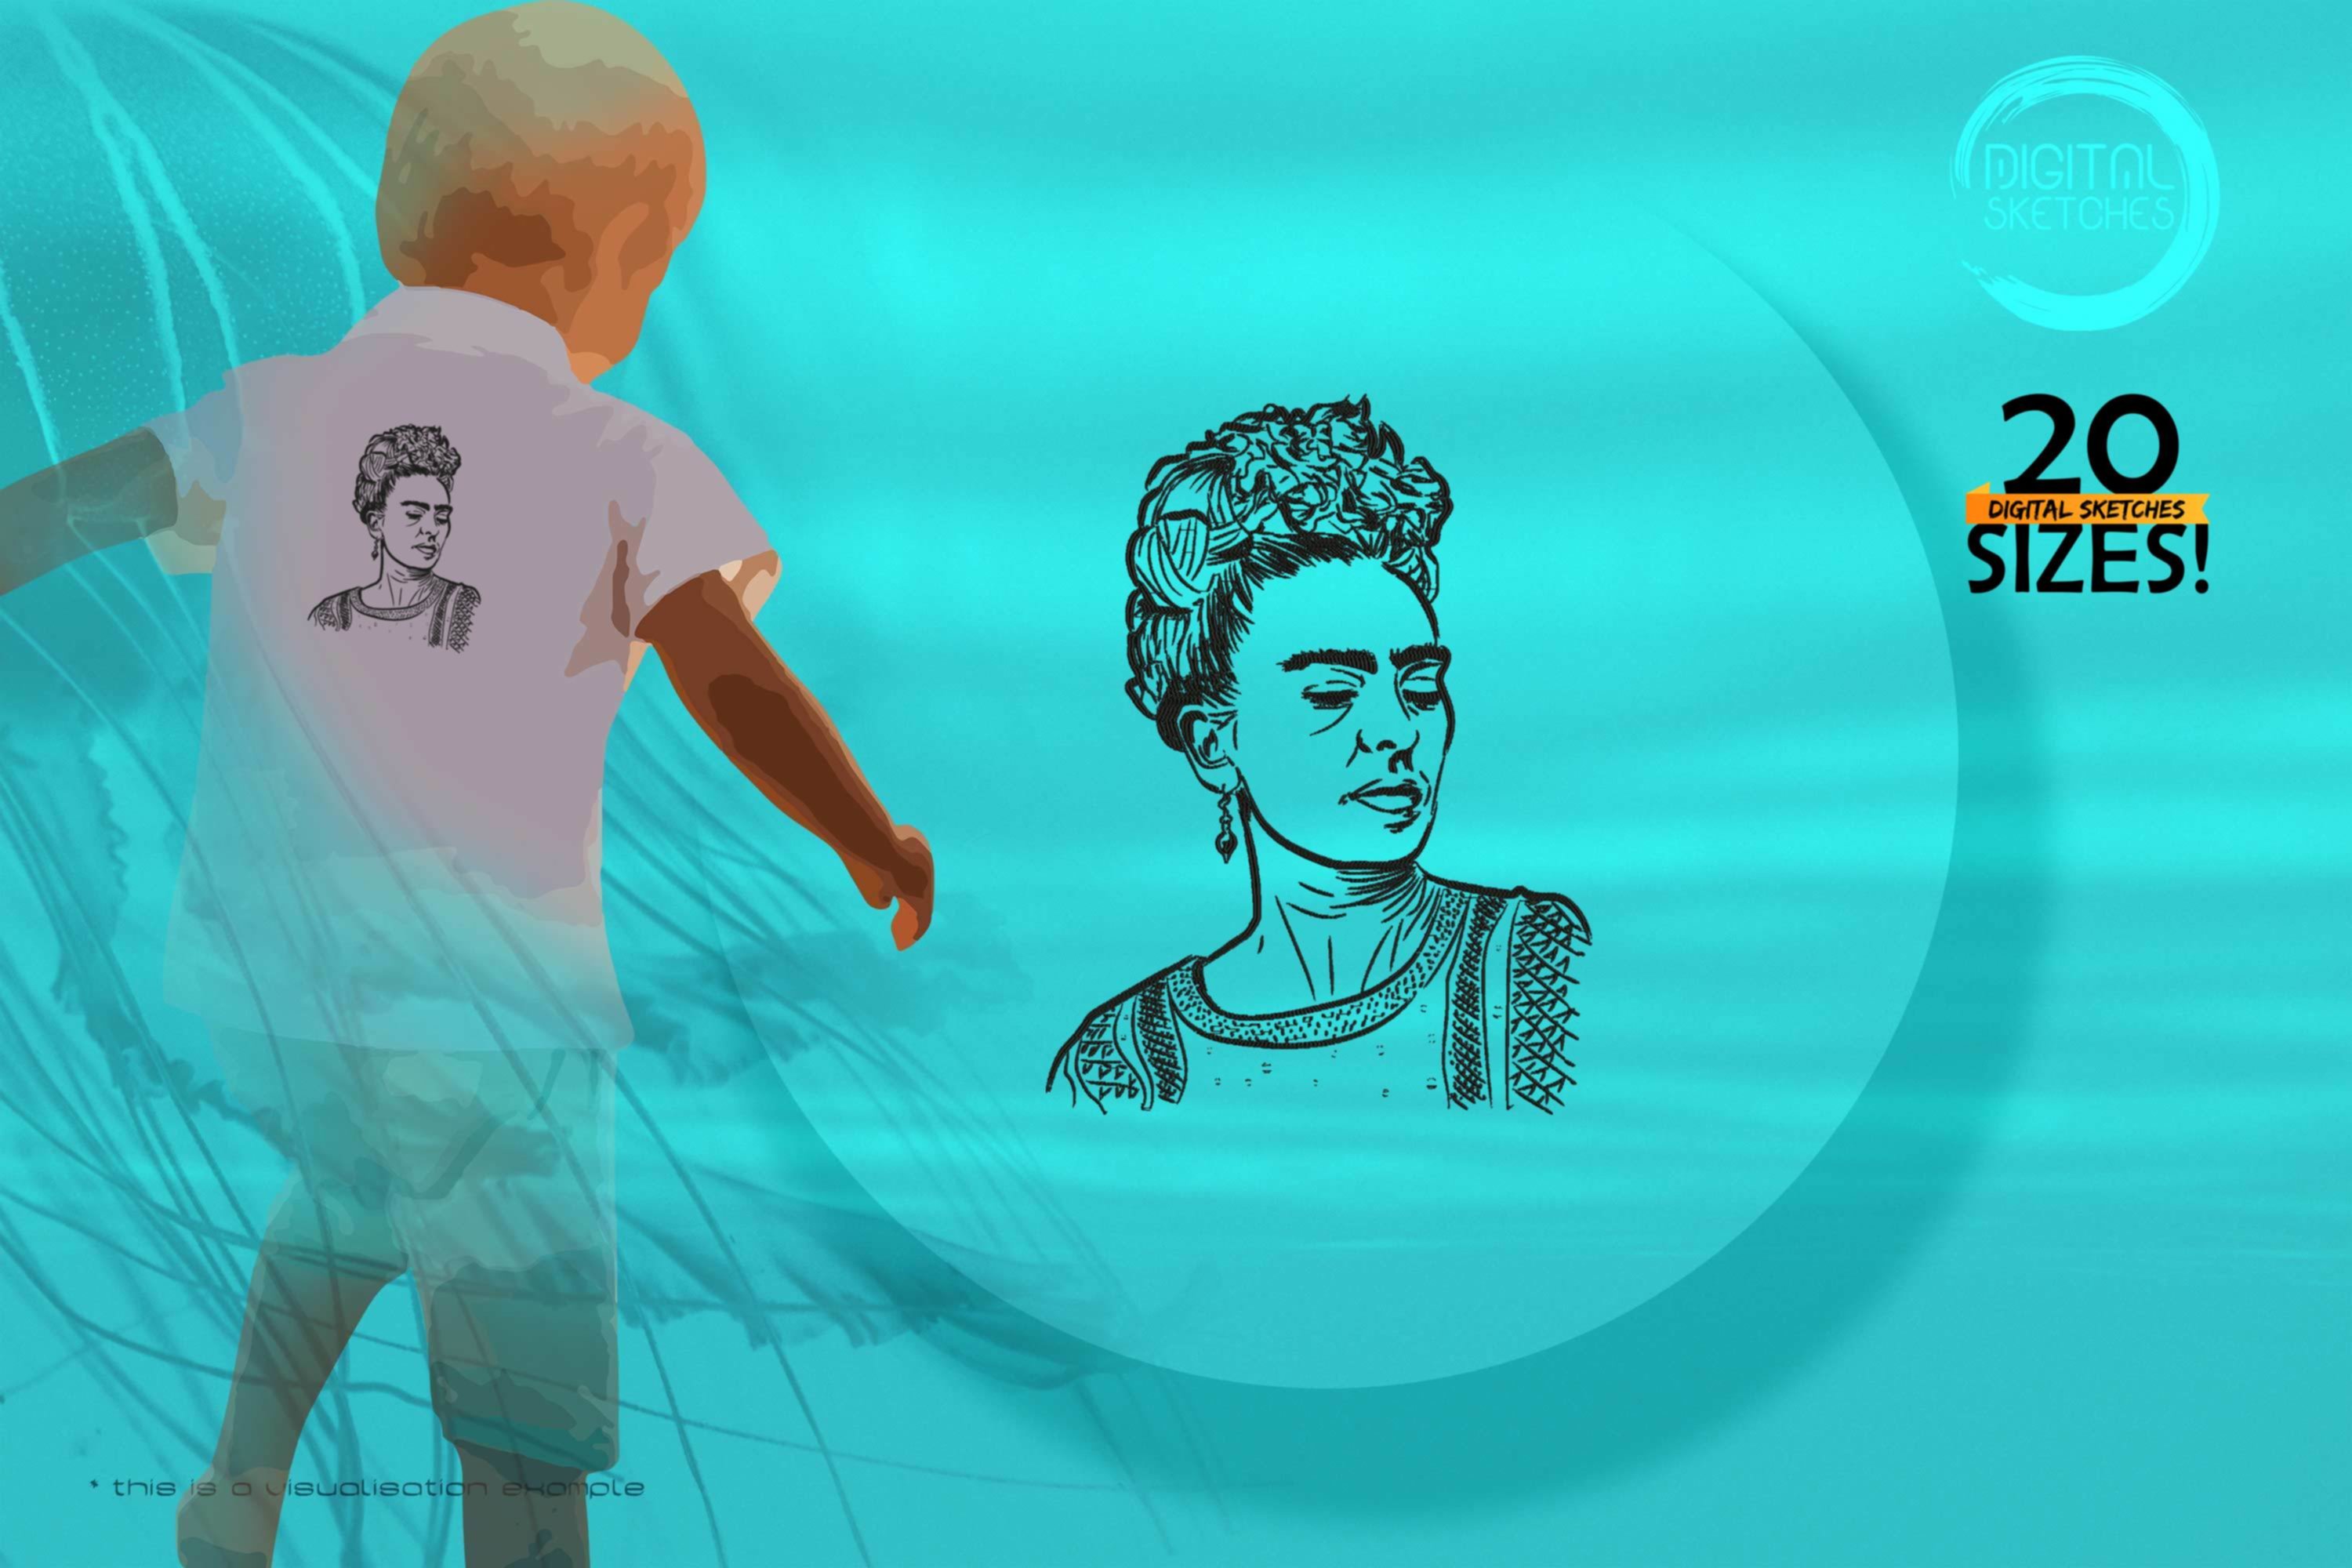 Tribute To Artist Magdalena Carmen Frieda Kahlo Y Calderon aka Frida Kahlo (Hand-Drawn Portrait)